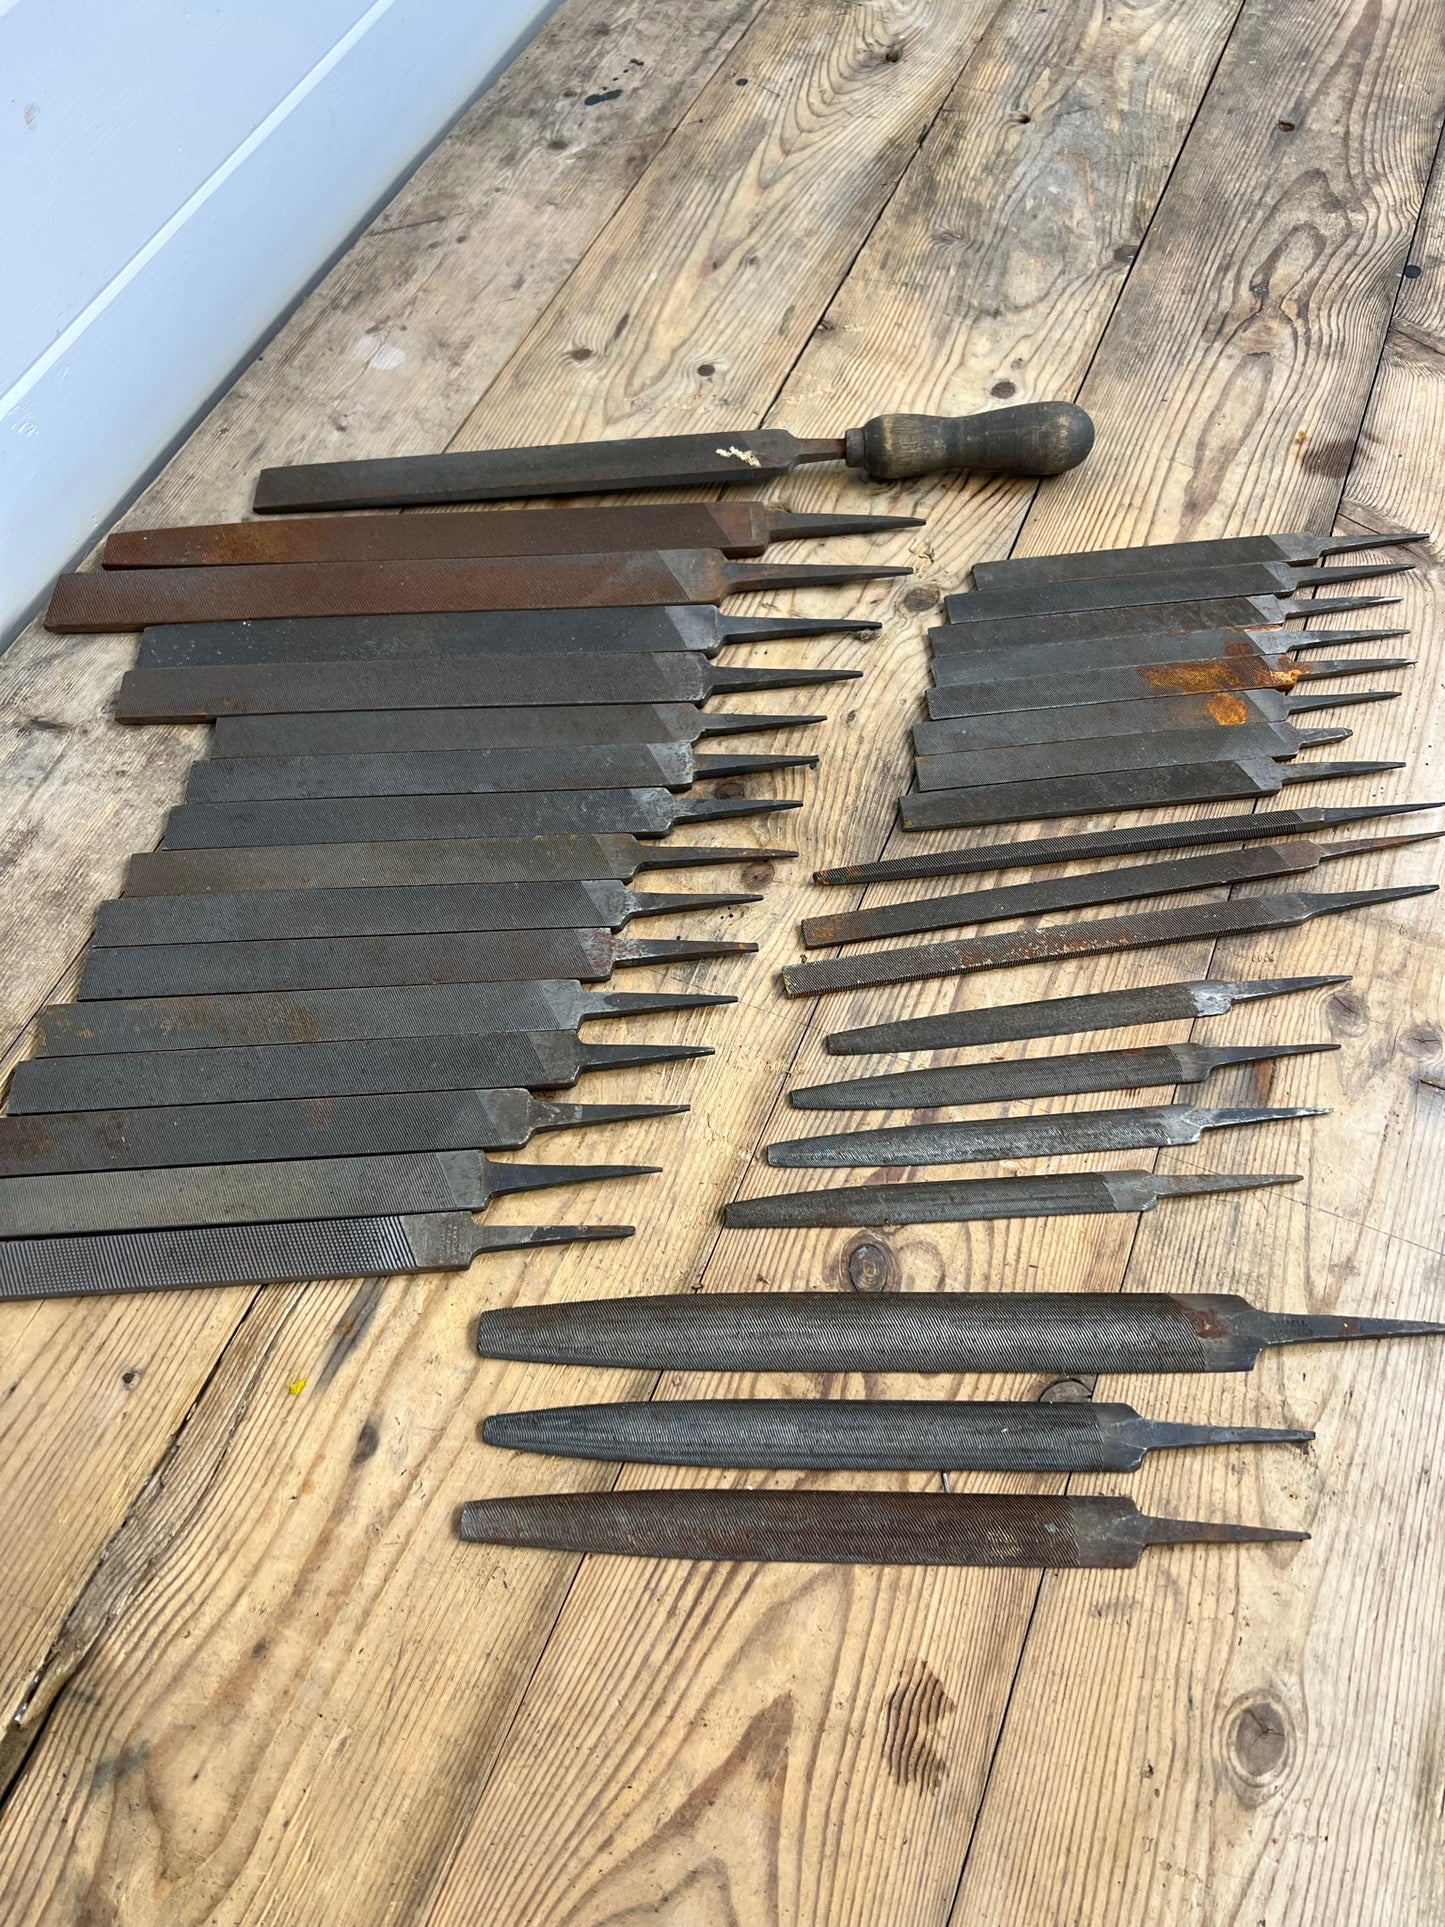 34x Vintage Sheffield Steel Metal Rasp Files JOB LOT Vintage Woodwork Tools